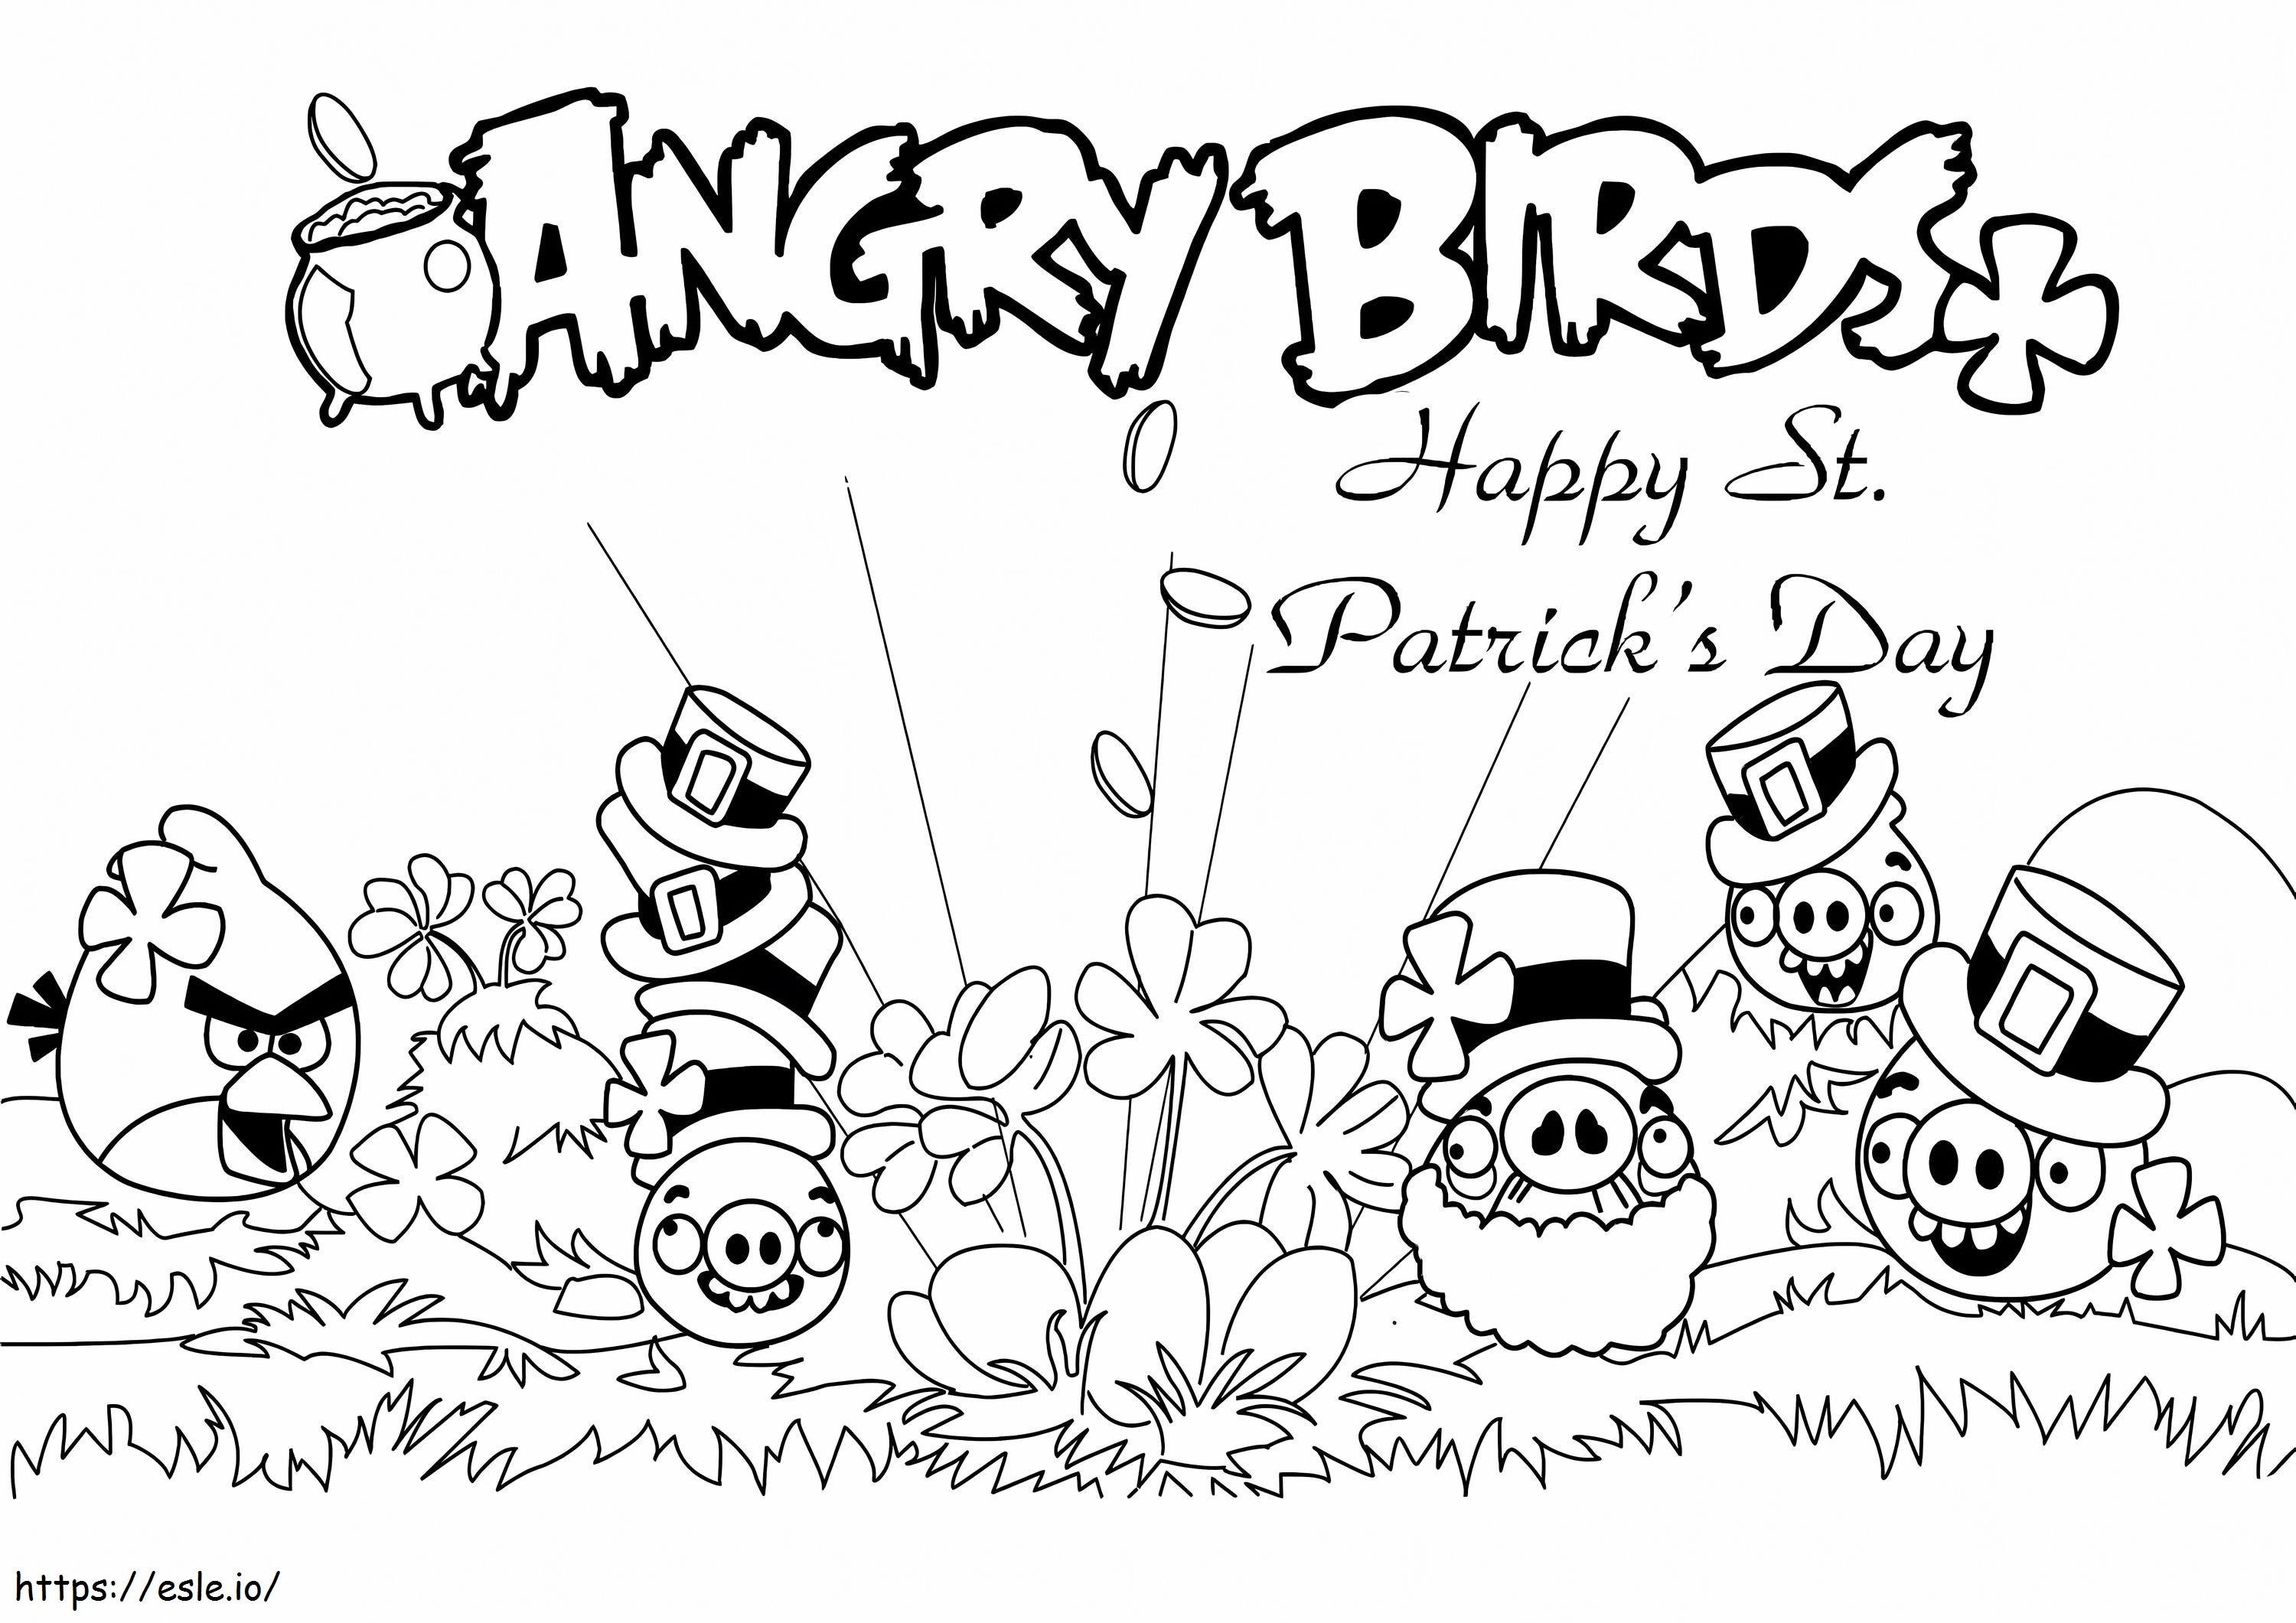 Angry Birds alles Gute zum St. Patricks Day ausmalbilder